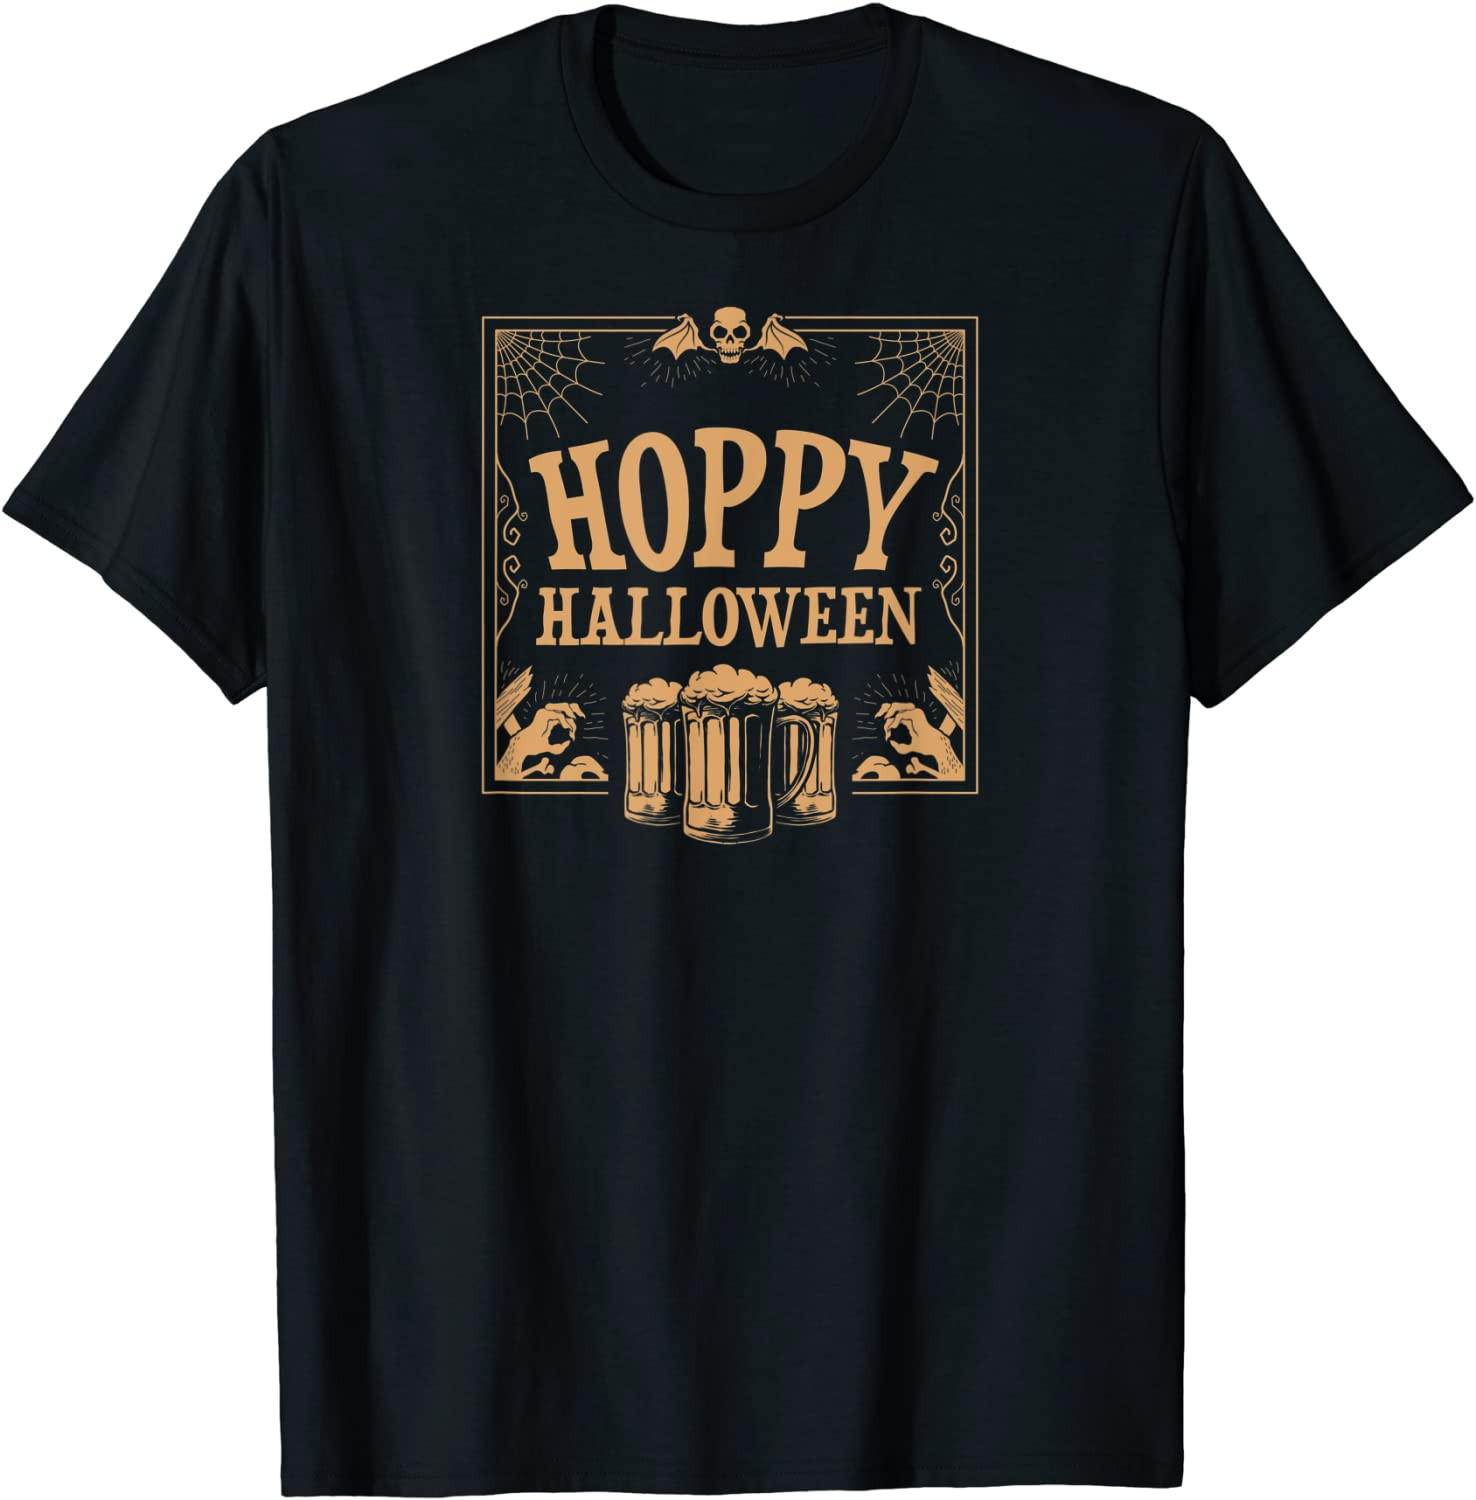 Hoppy Halloween Beer Drinking Spooky Local Craft Beer Lover T-Shirt